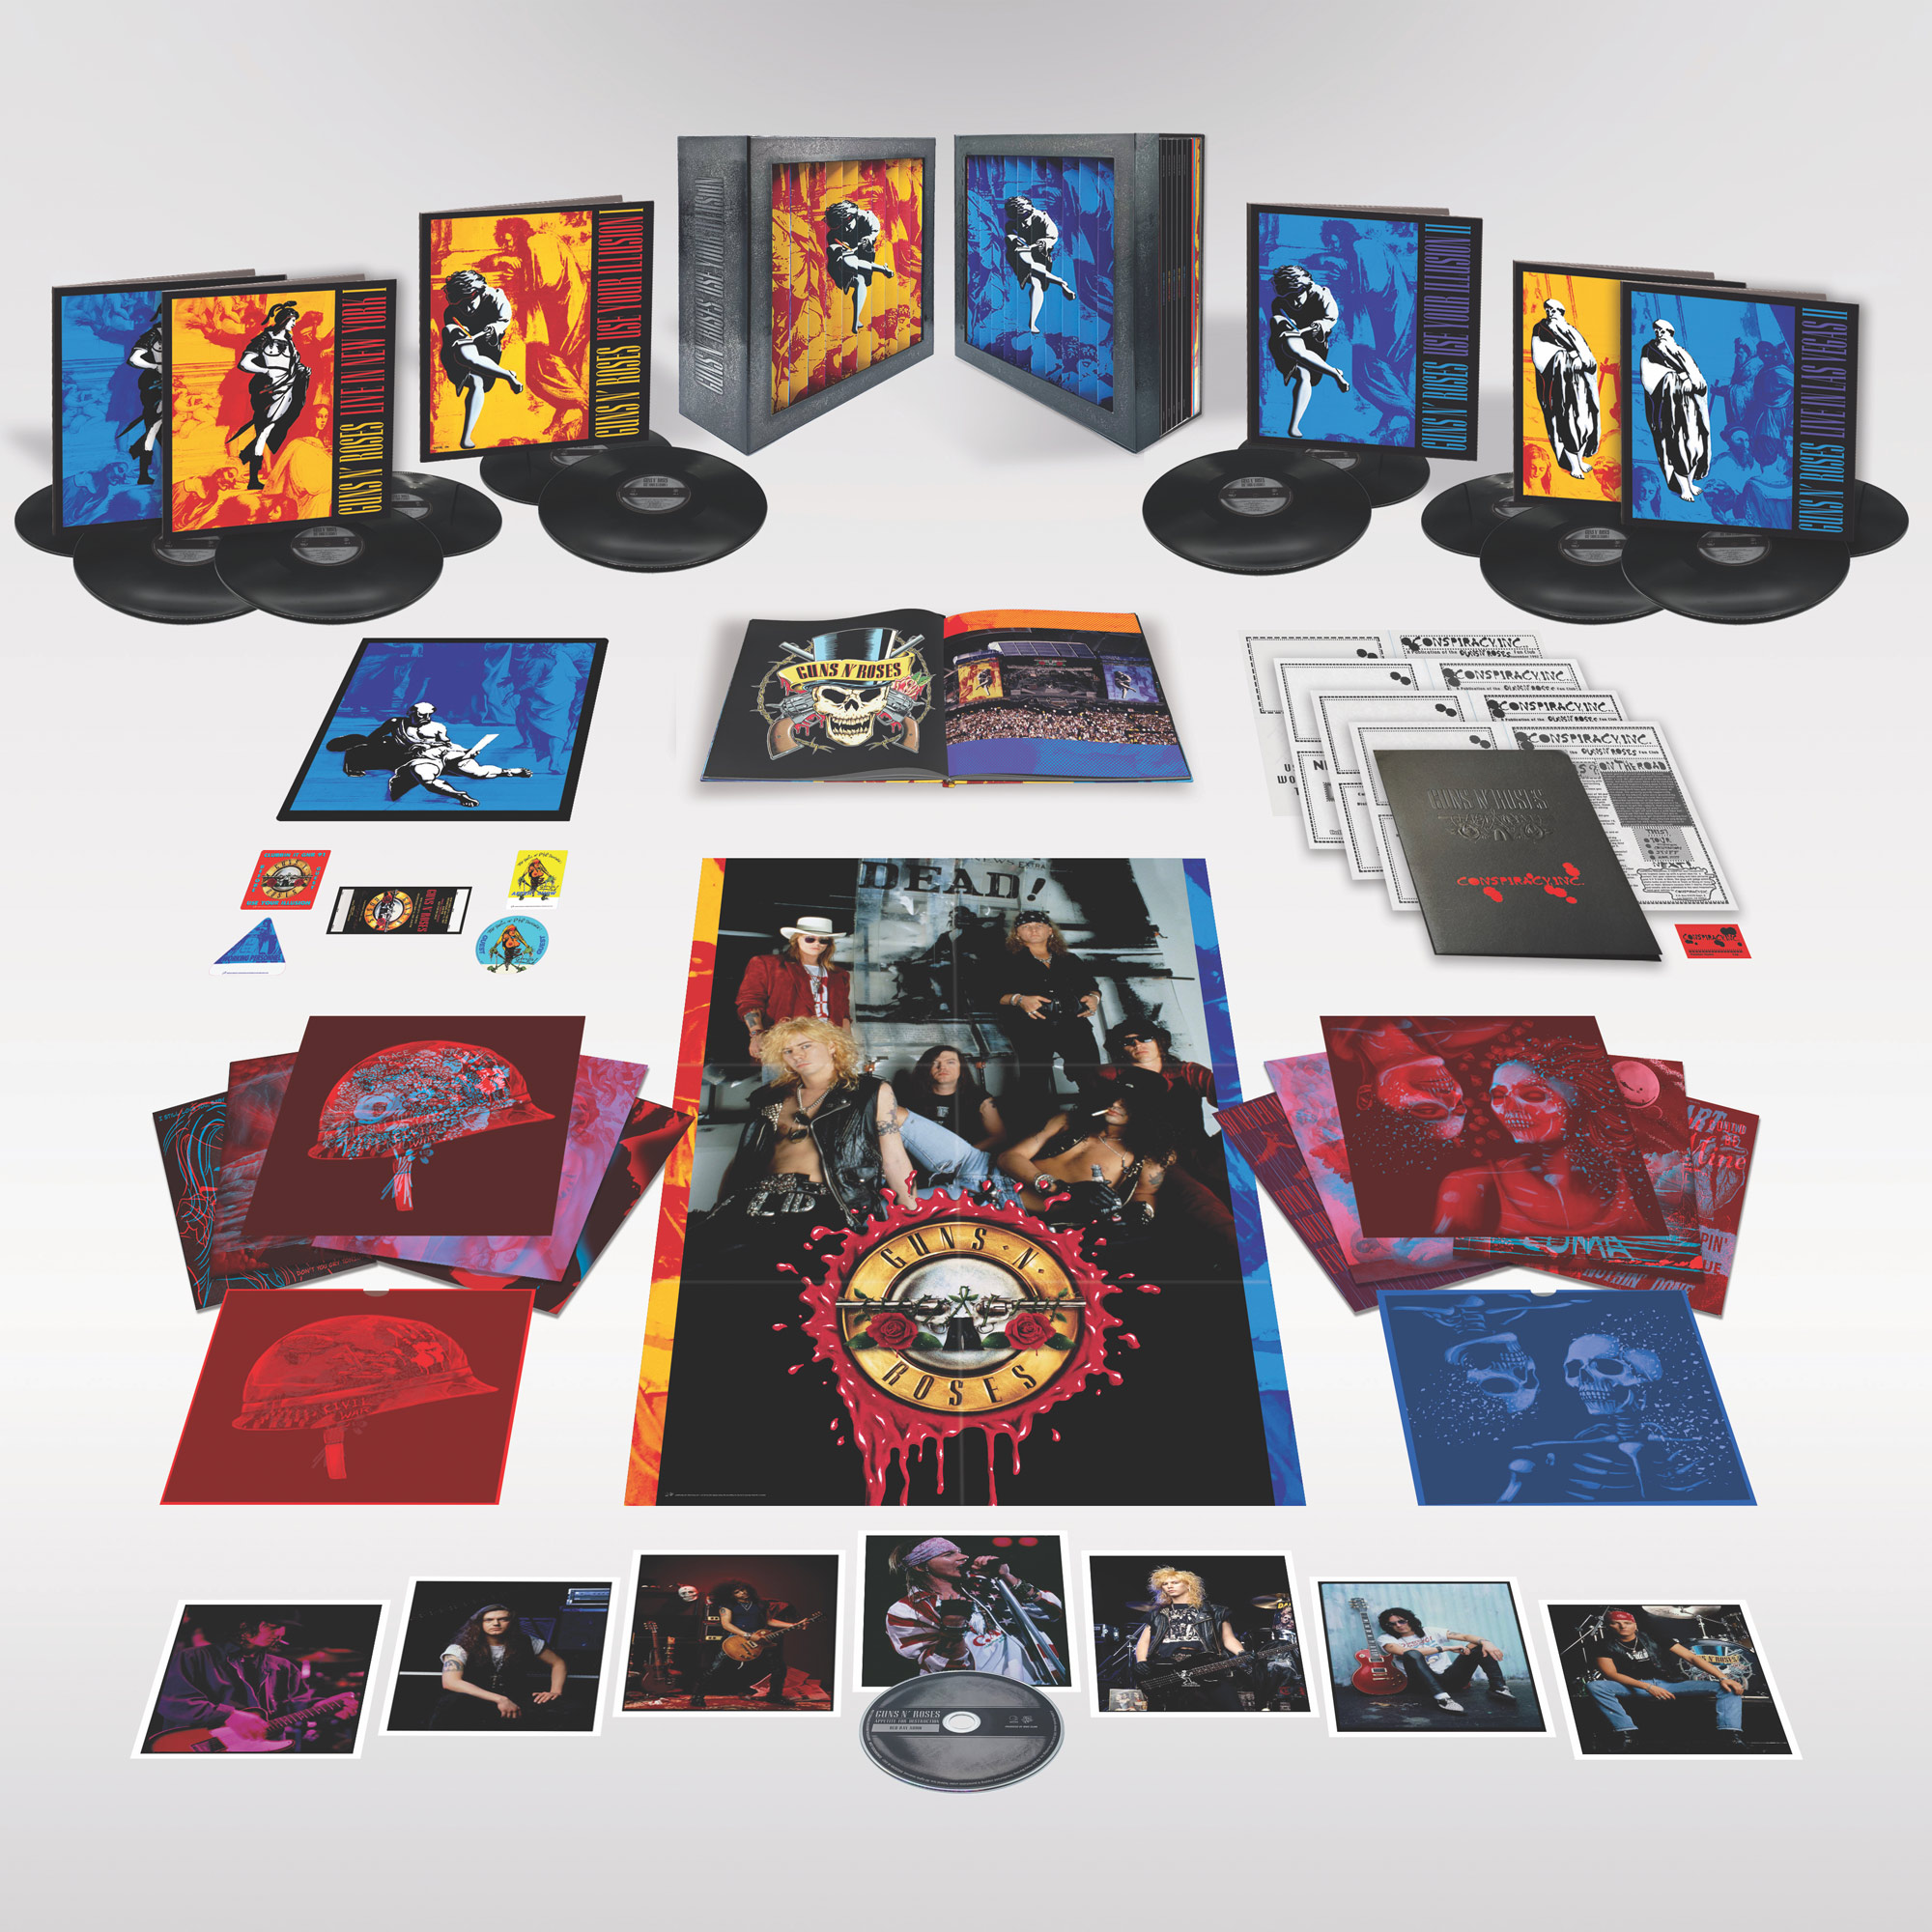 Guns N Roses - Appetite For Destruction - Super Deluxe Edition CD